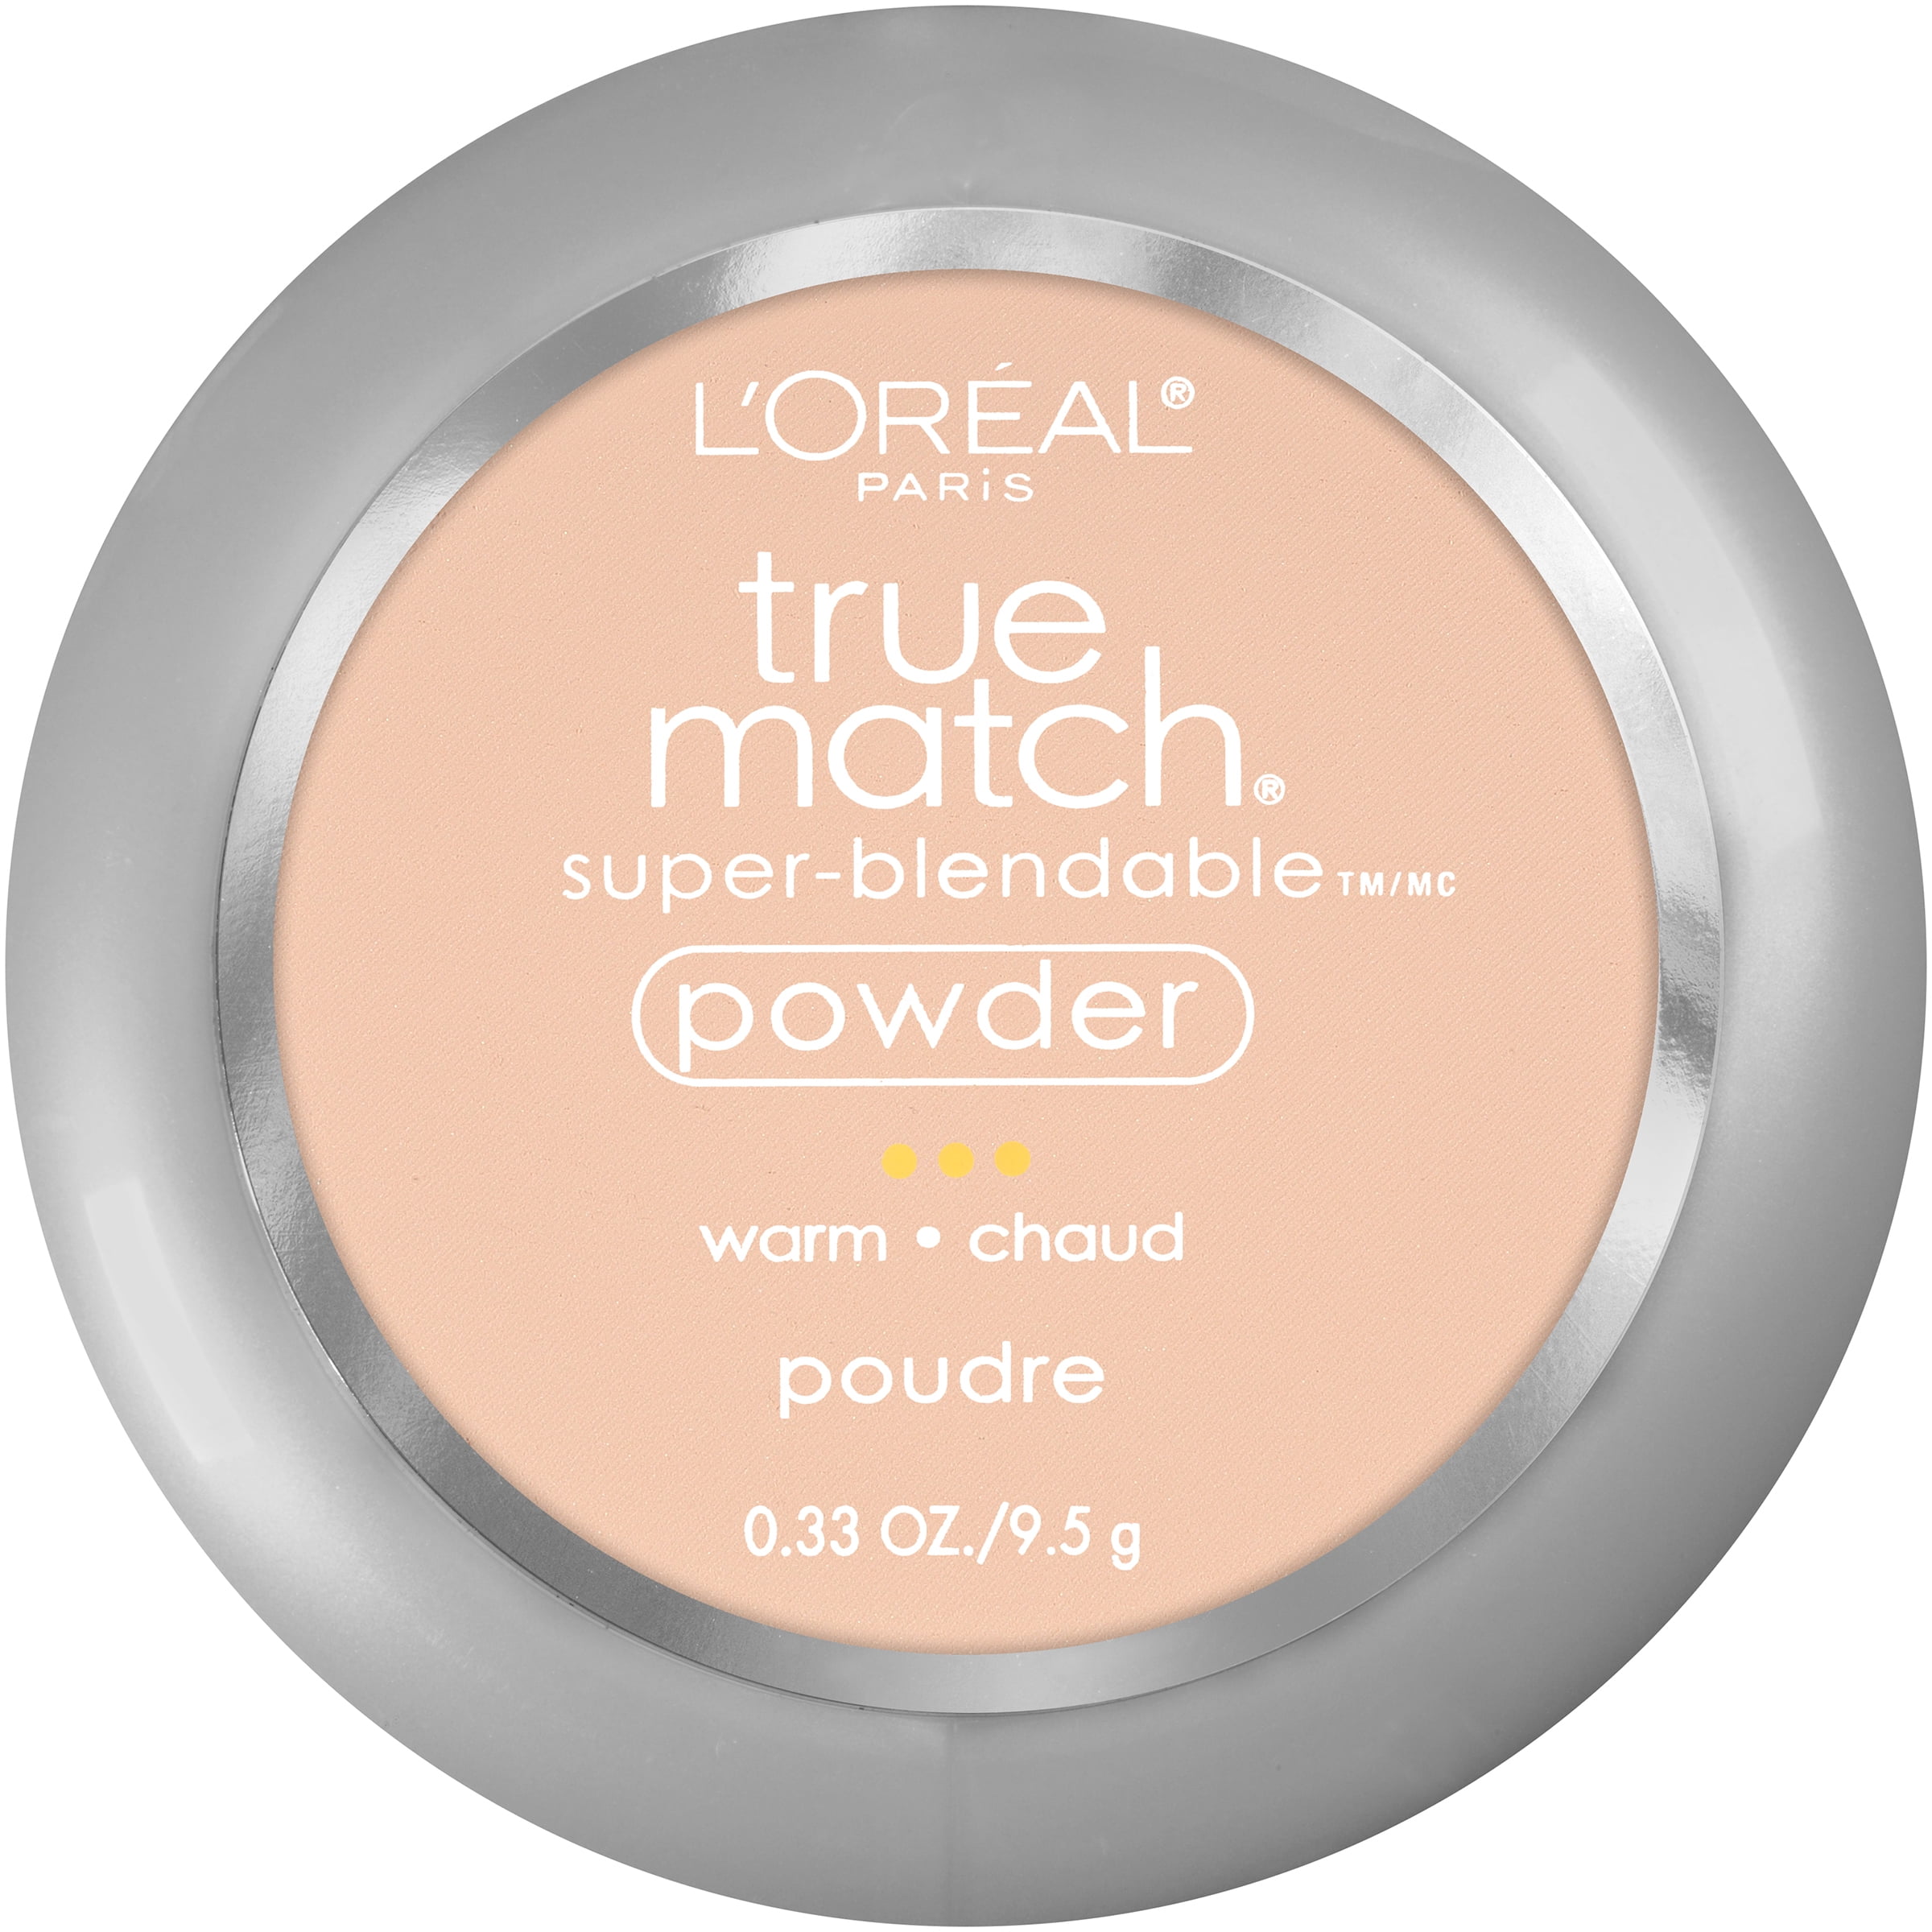 L'Oreal Paris True Match Super Blendable Oil Free Makeup Powder, Light Ivory, 0.33 oz